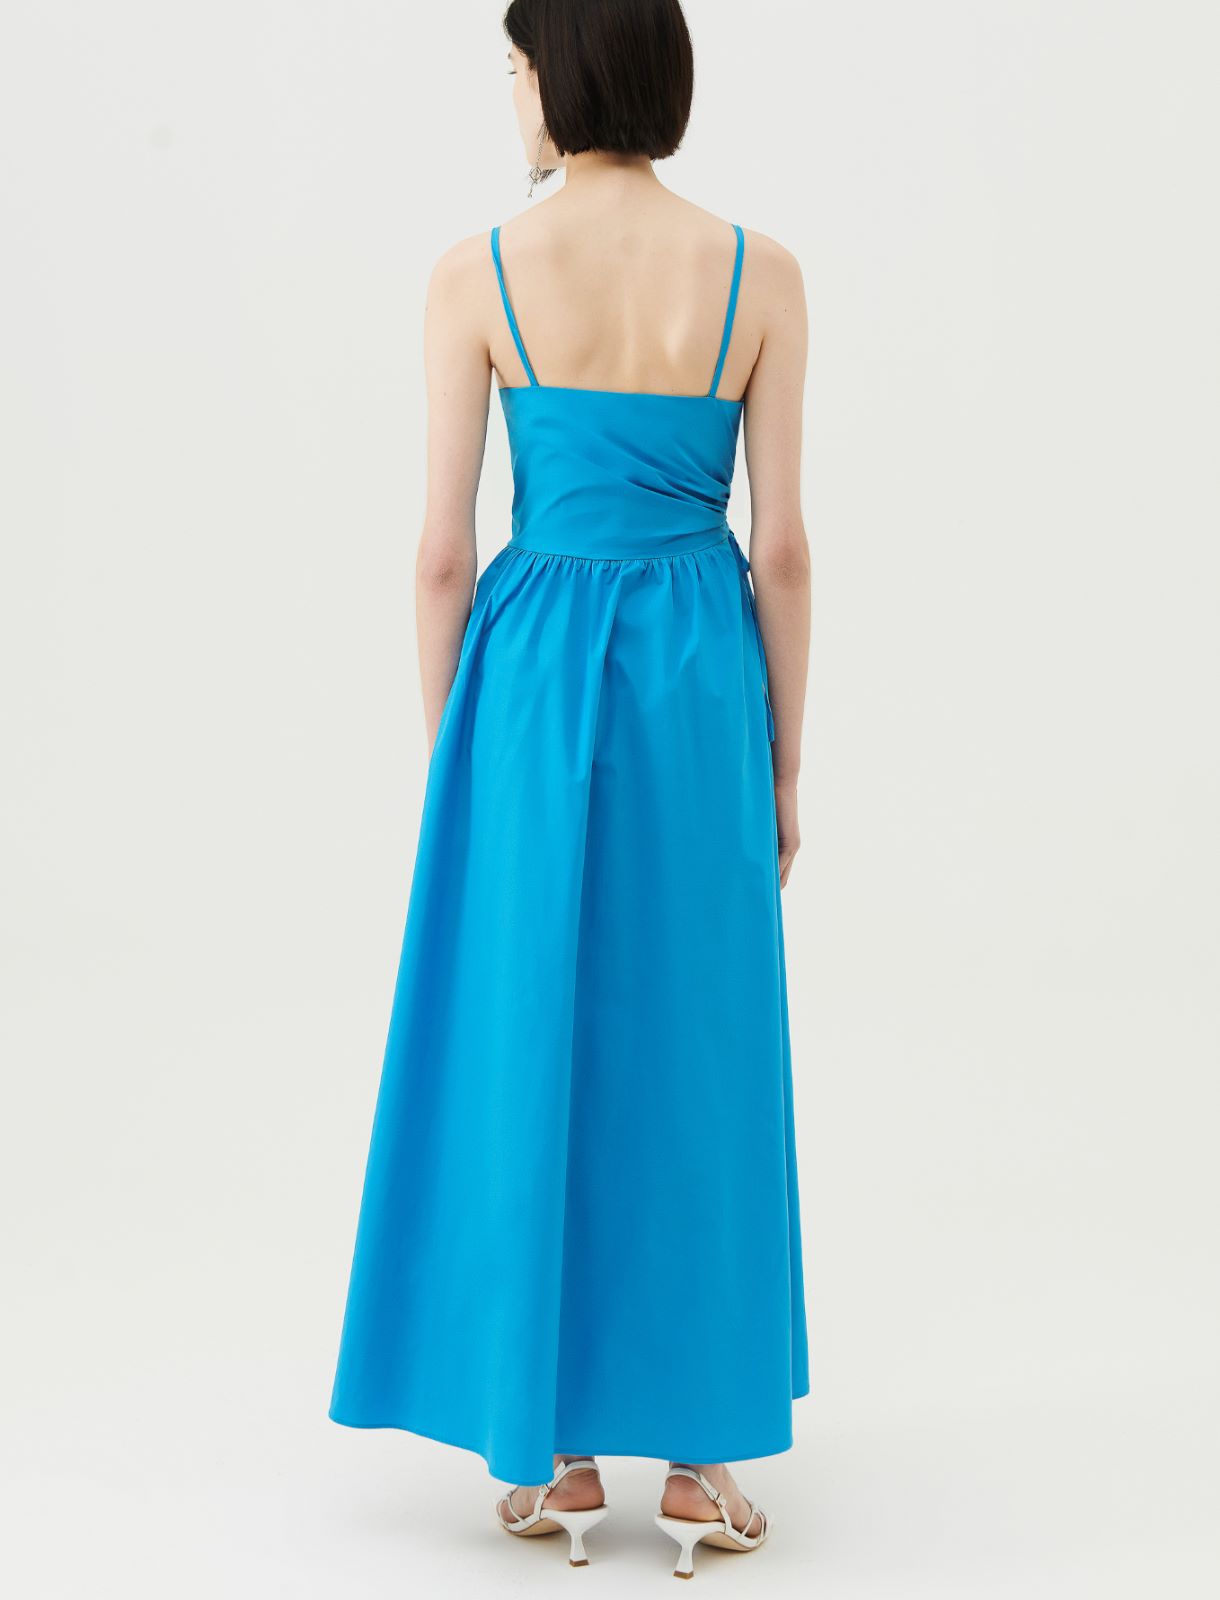 Poplin dress - Turquoise - Marella - 2